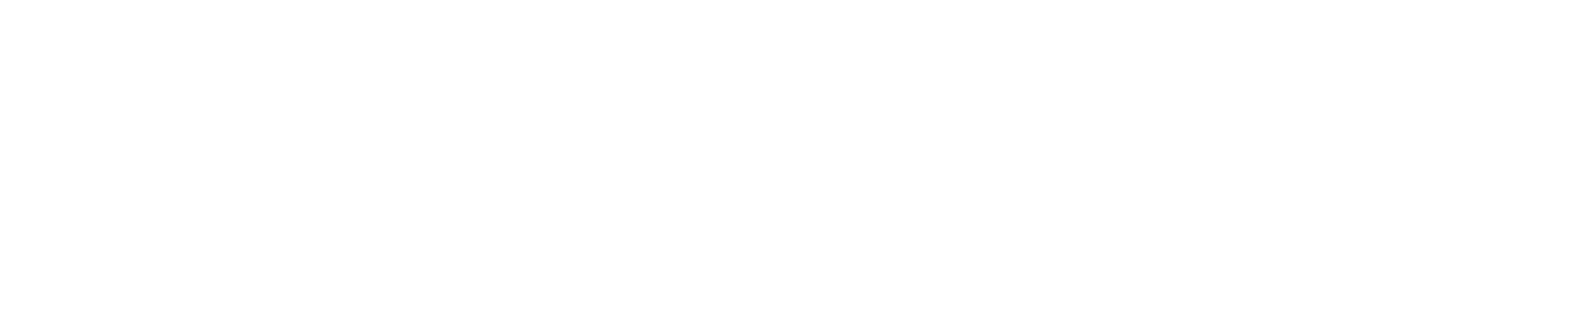 Aboitiz Power logo large for dark backgrounds (transparent PNG)